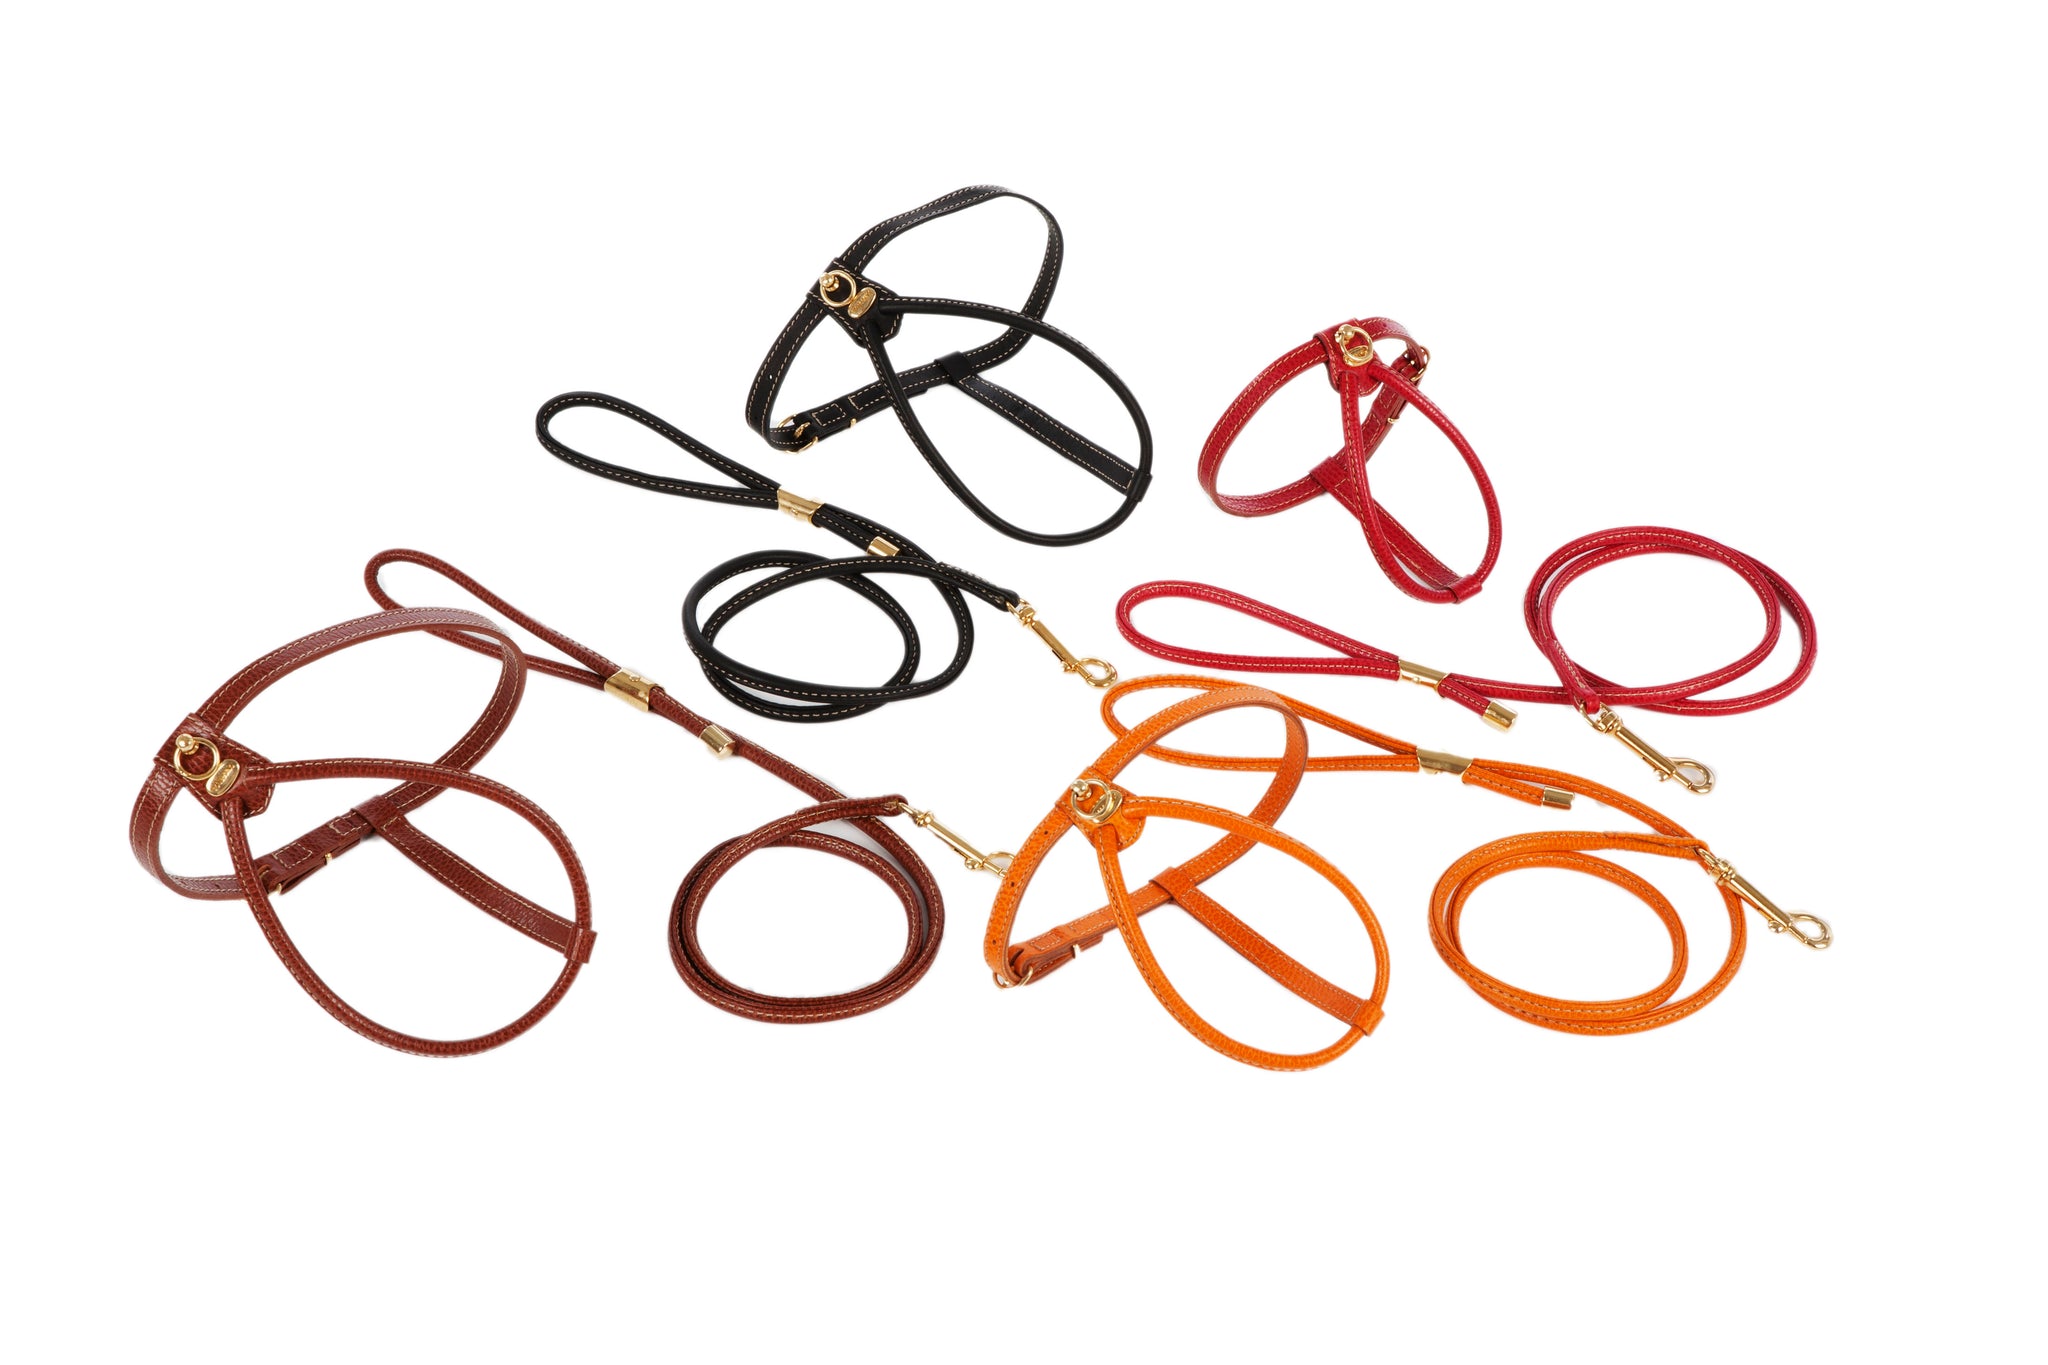 Cinopelca - Dog "Harness Set" - Italian Harness and Lead Set - 6 Color Options